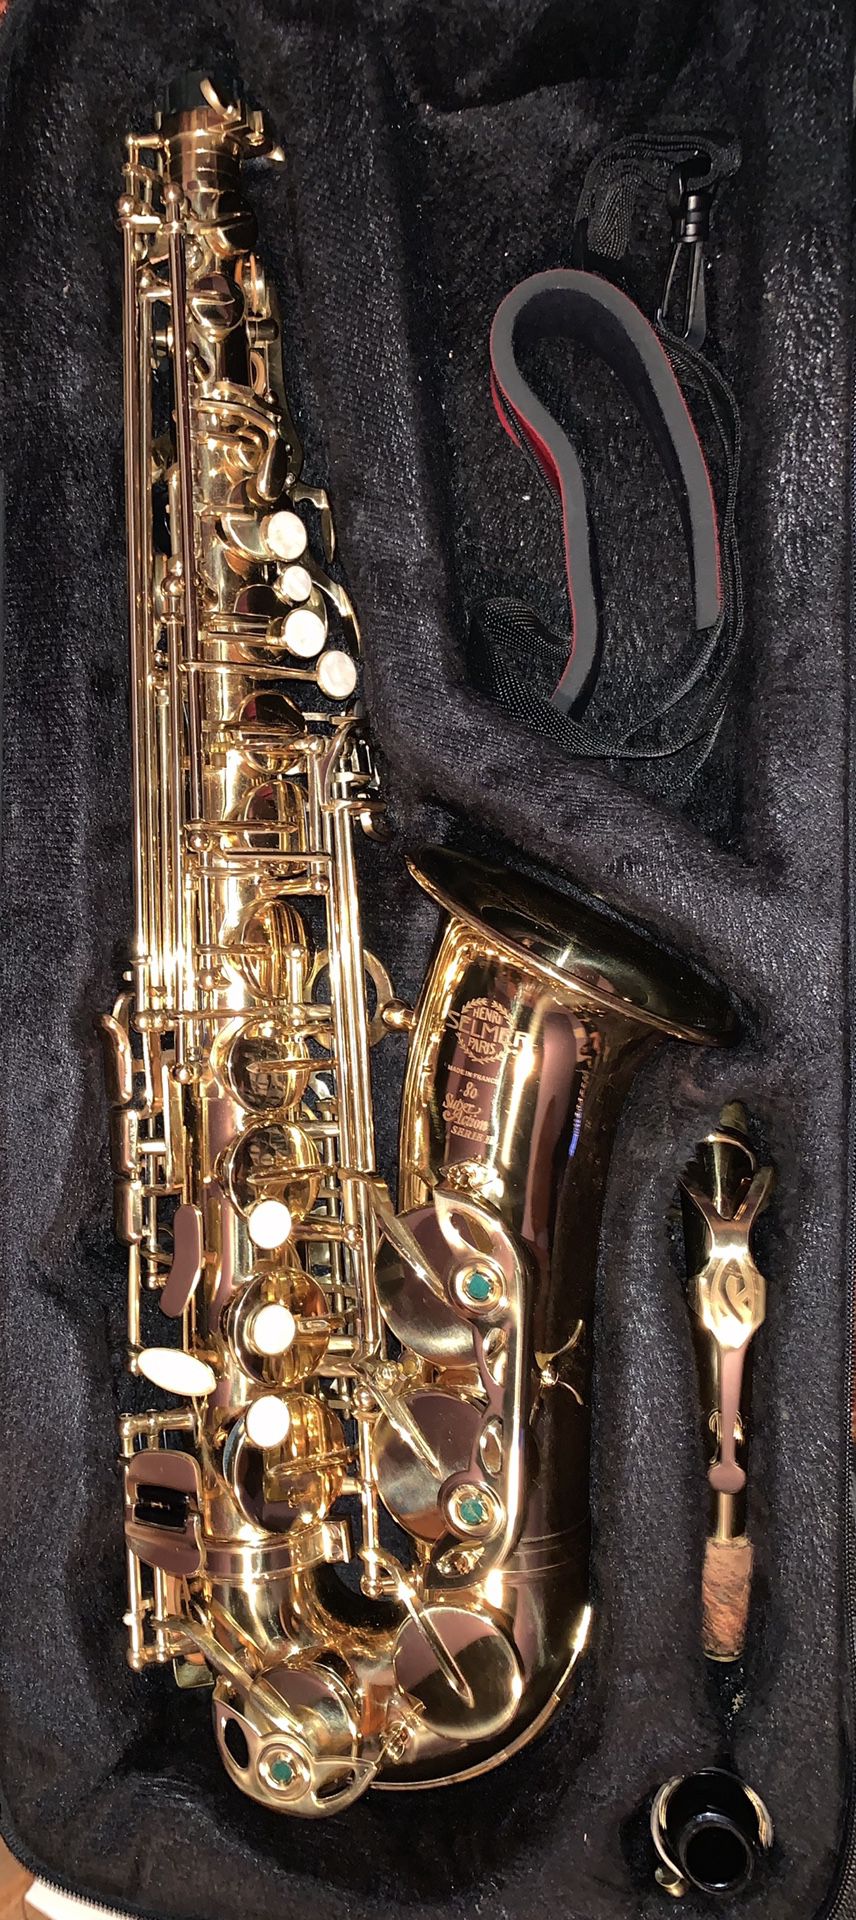 Henri selmer paris 80 super action serie II alto saxophone.